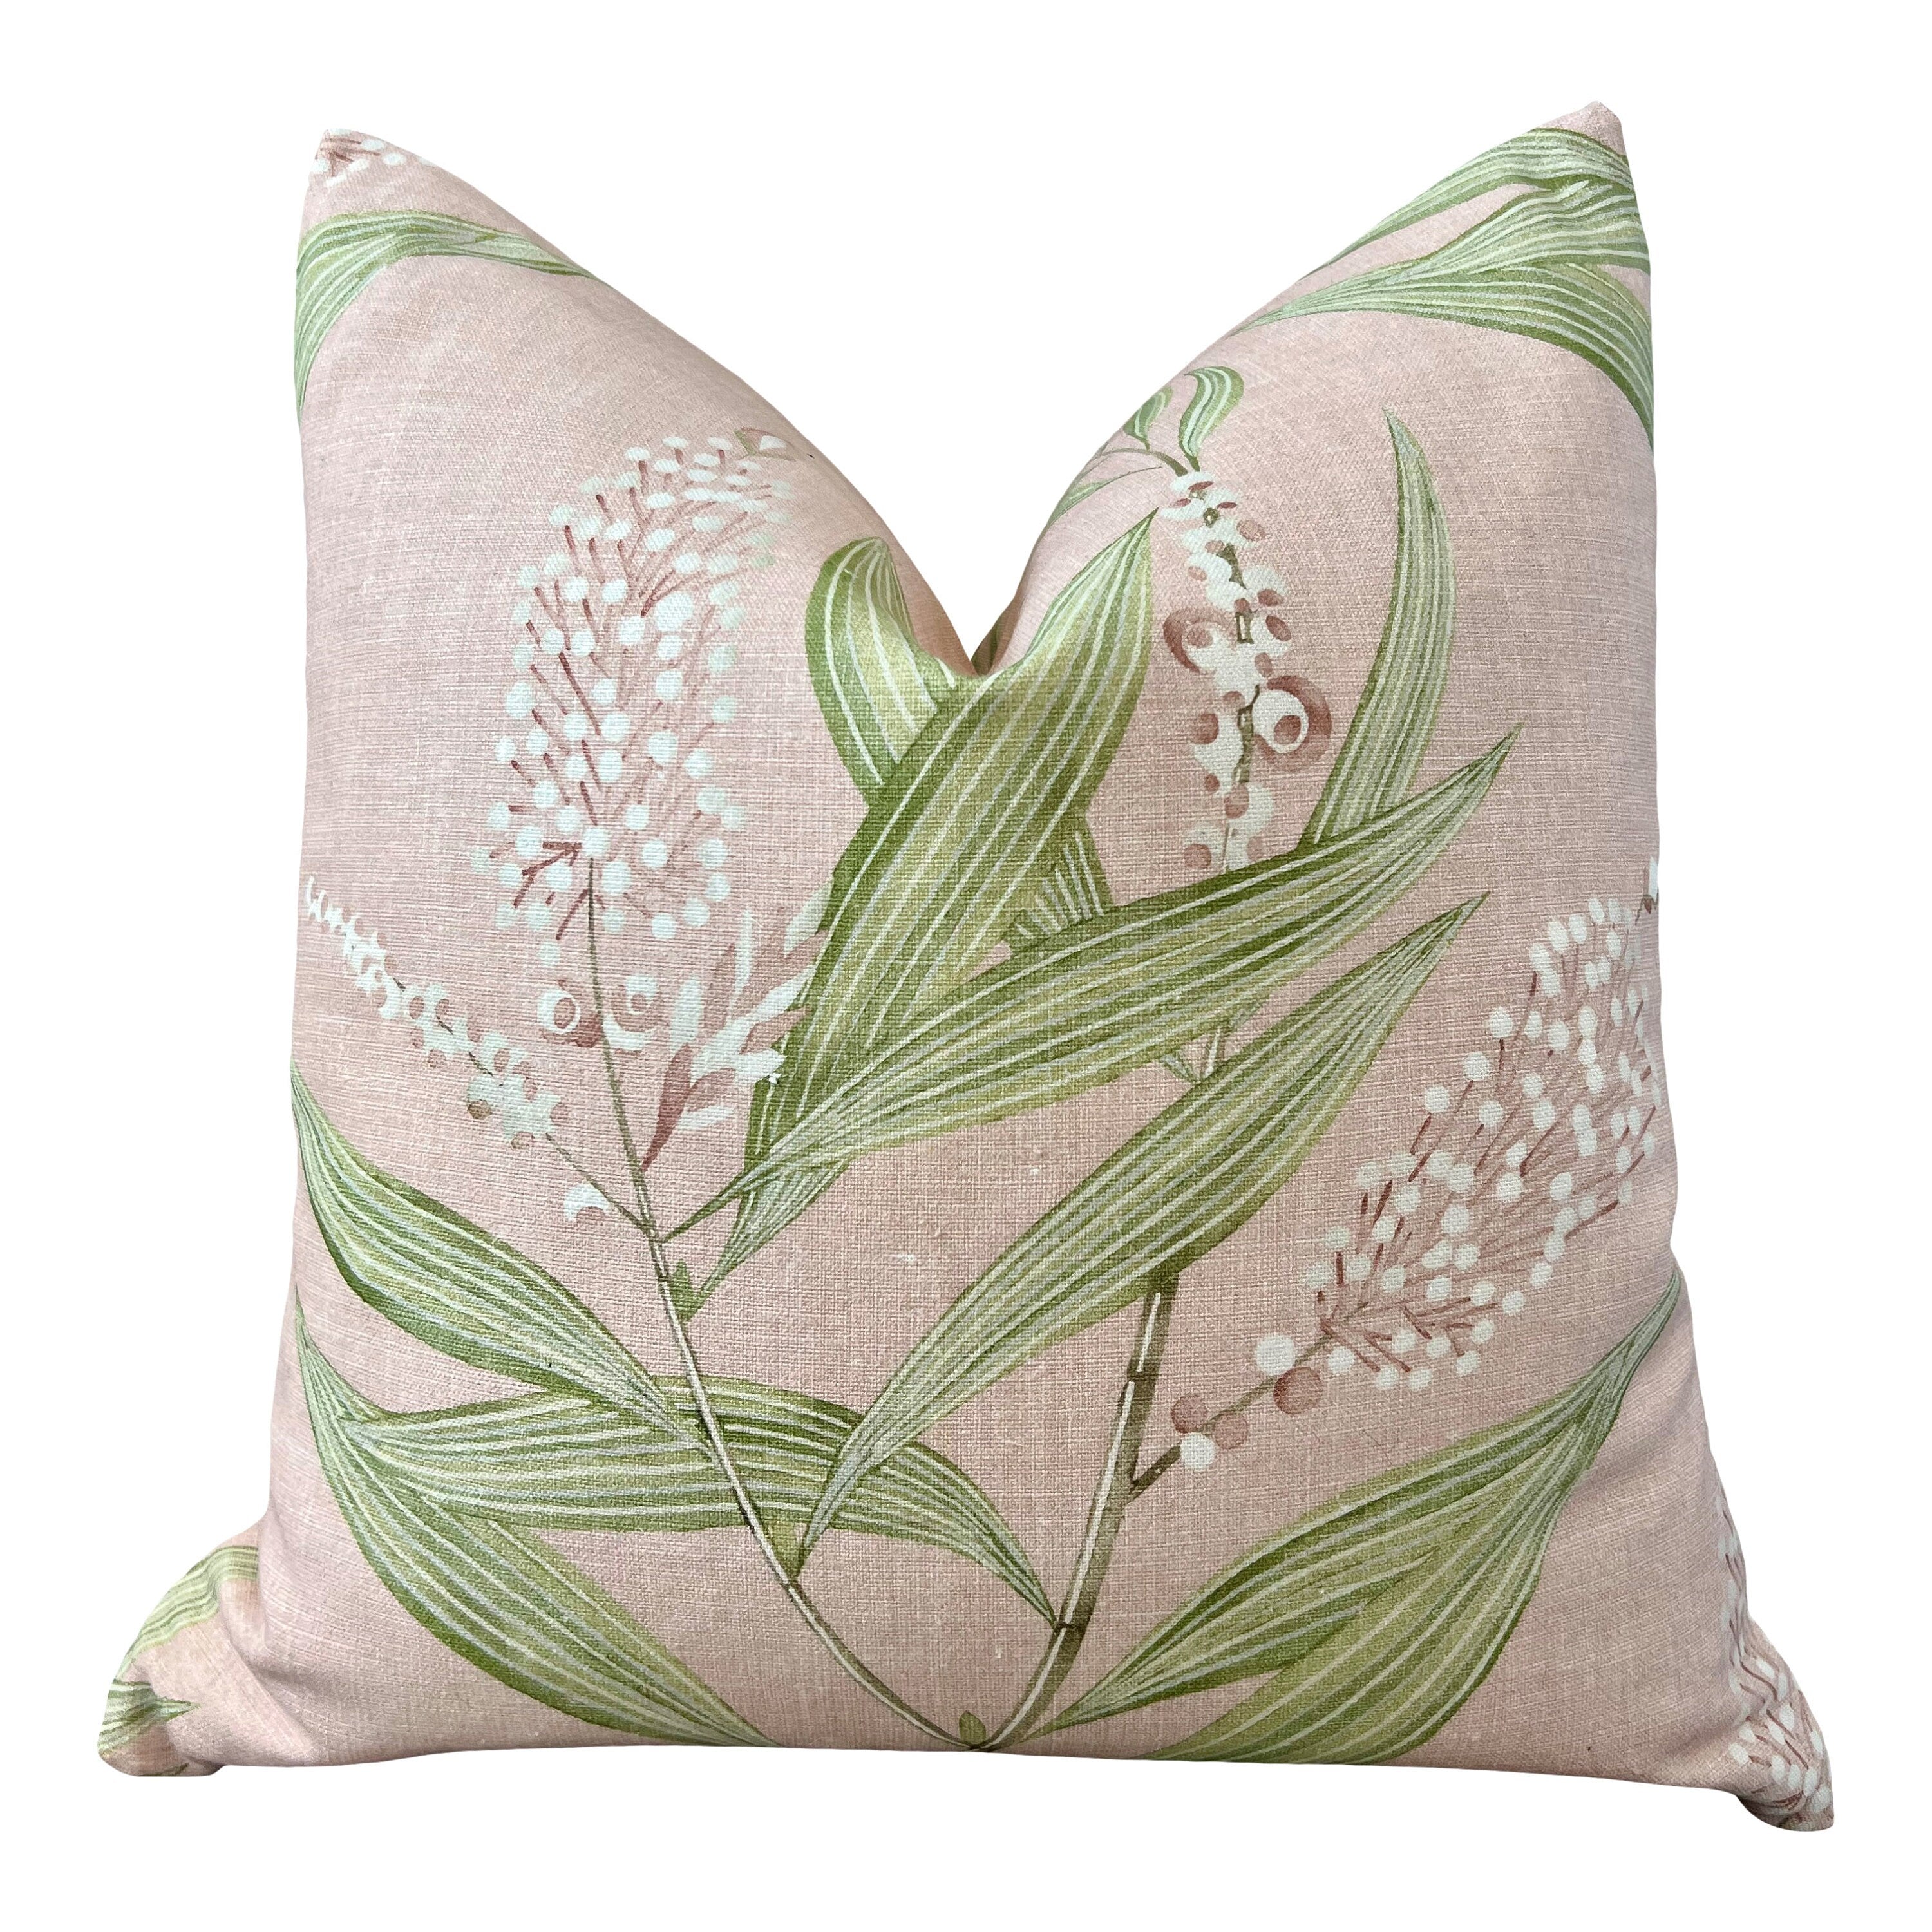 Winter Bud Floral Pillow in Blush. Designer Pillows, High End Pillow Floral Covers, Euro Sham Case 26"X26", Accent Blush Lumbar Pillows